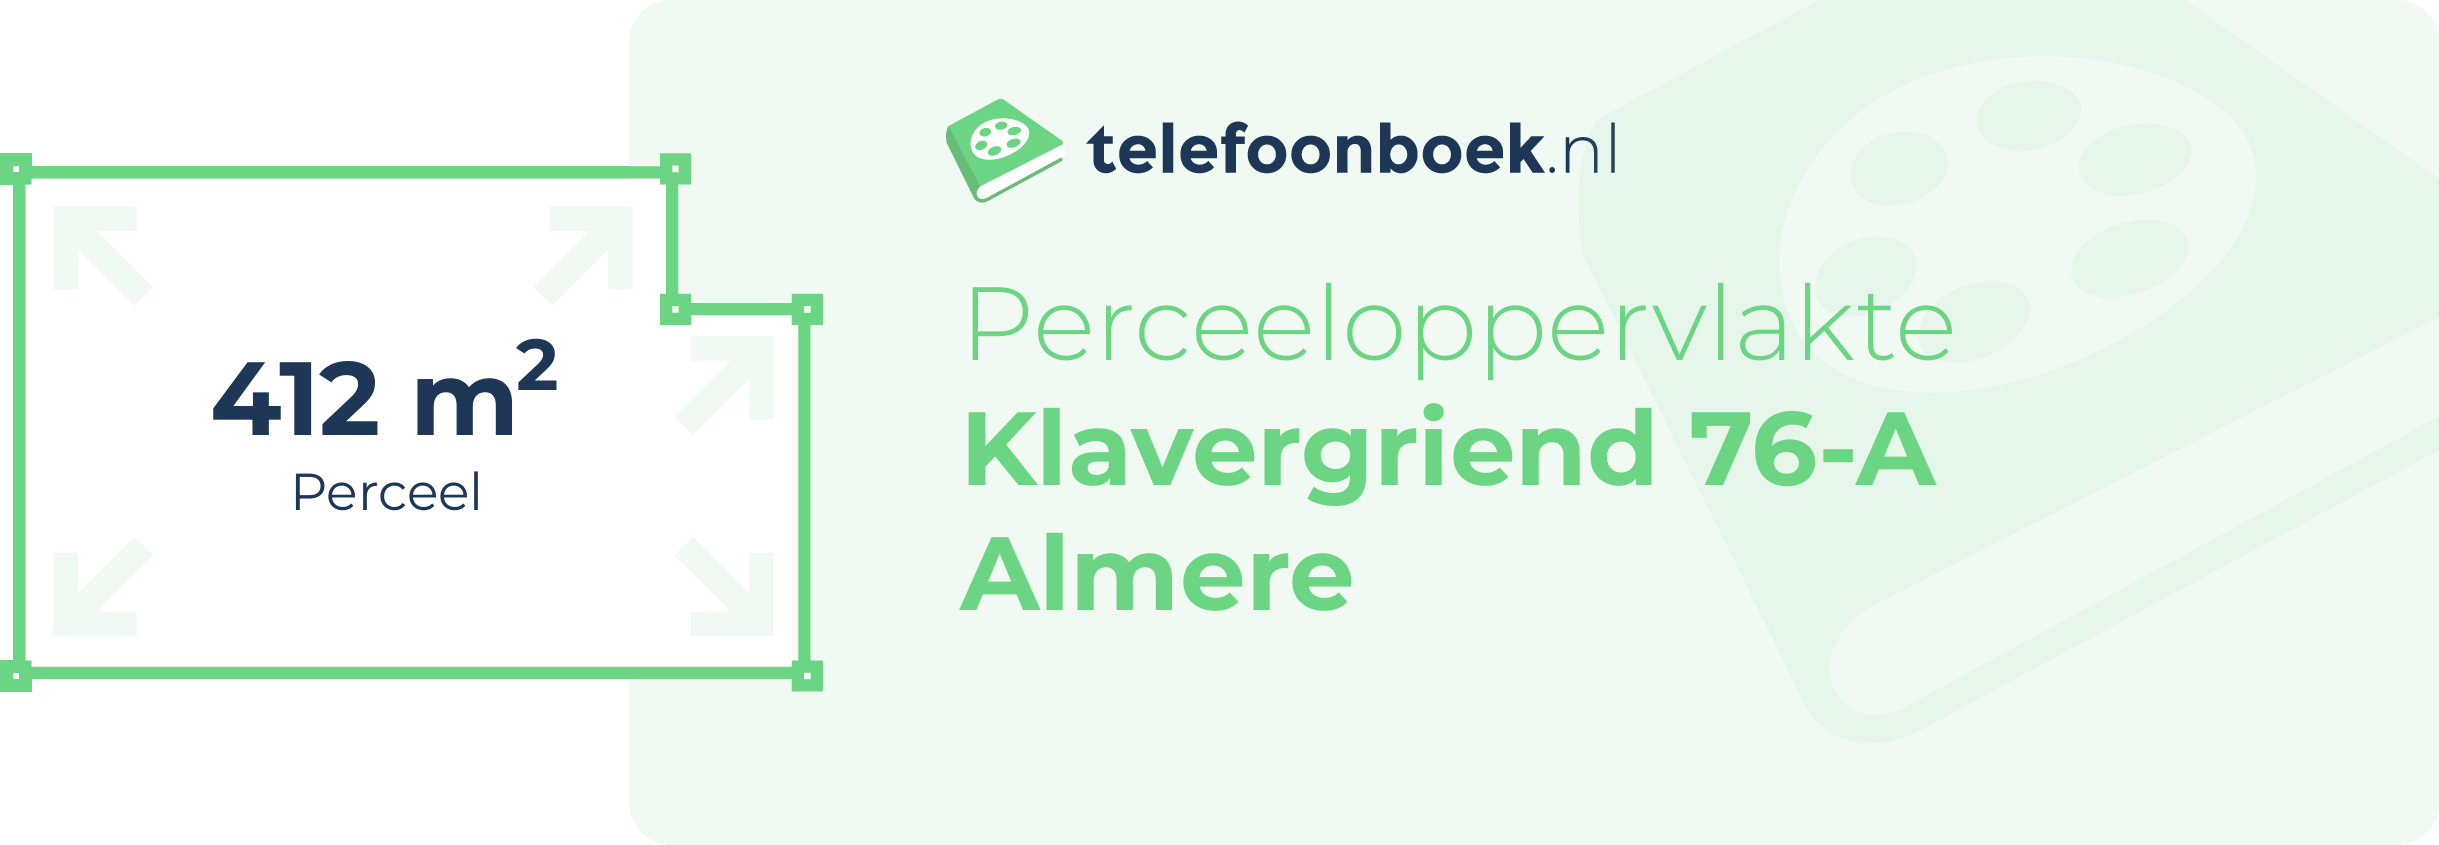 Perceeloppervlakte Klavergriend 76-A Almere